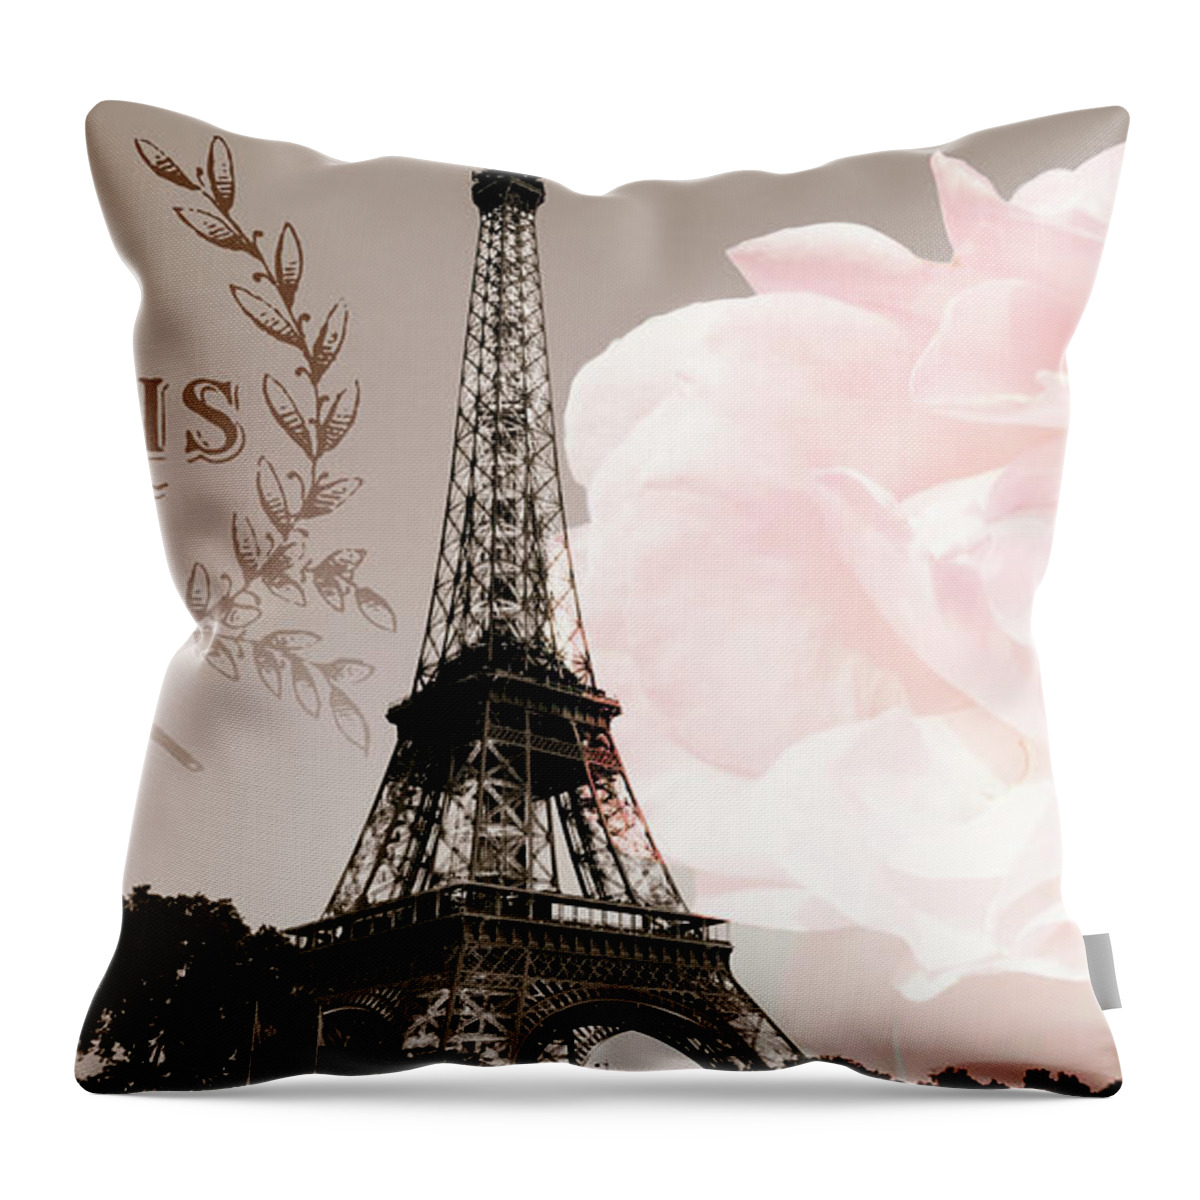 Vintage Throw Pillow featuring the photograph Vintage Paris by Emily Navas